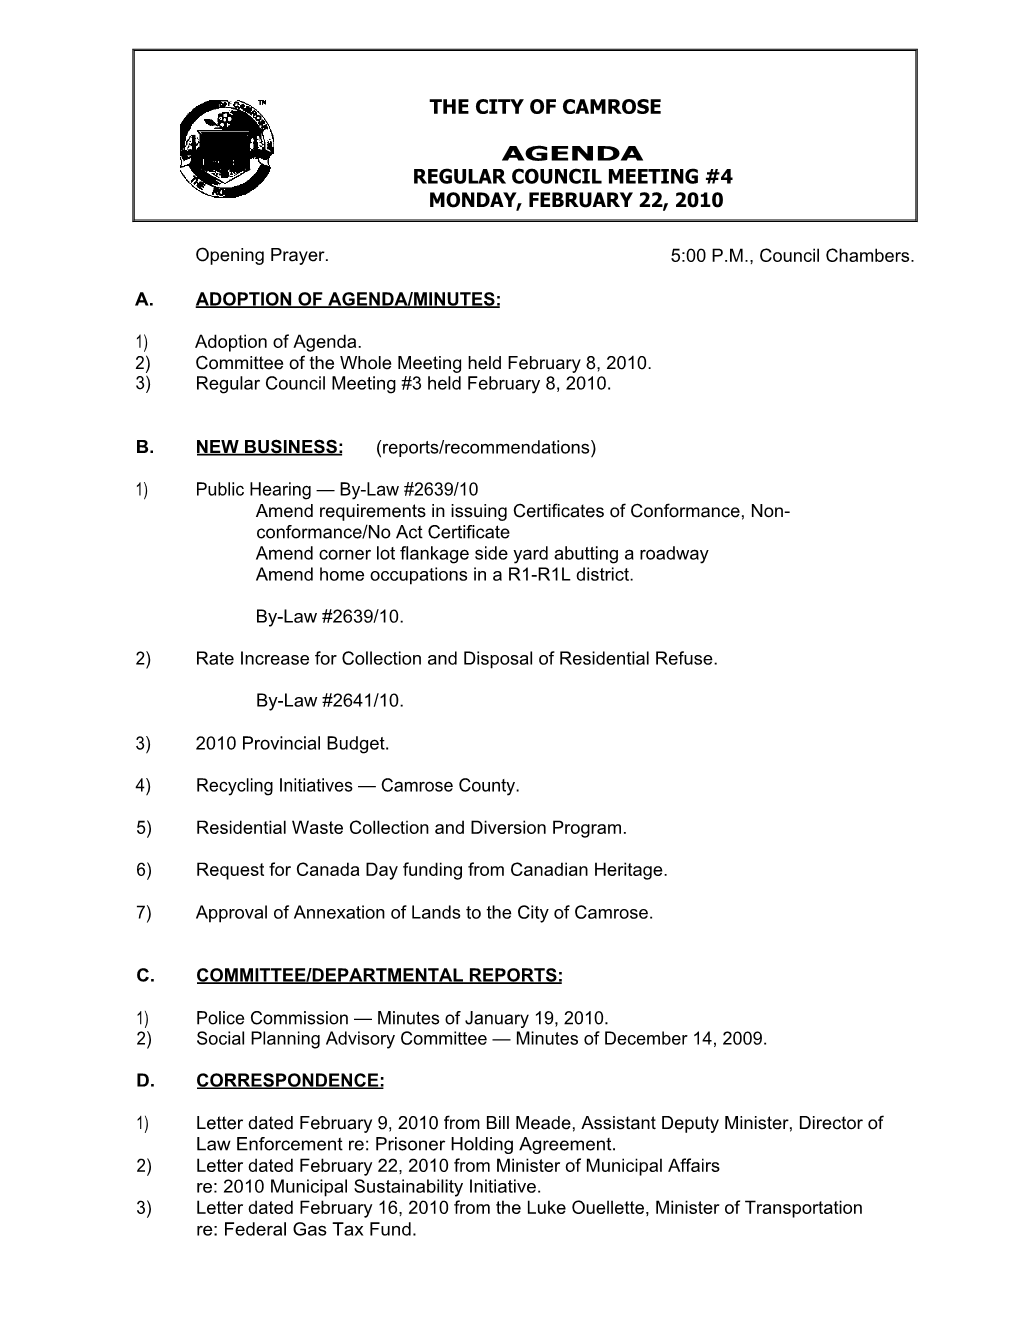 The City of Camrose Agenda Regular Council Meeting #4